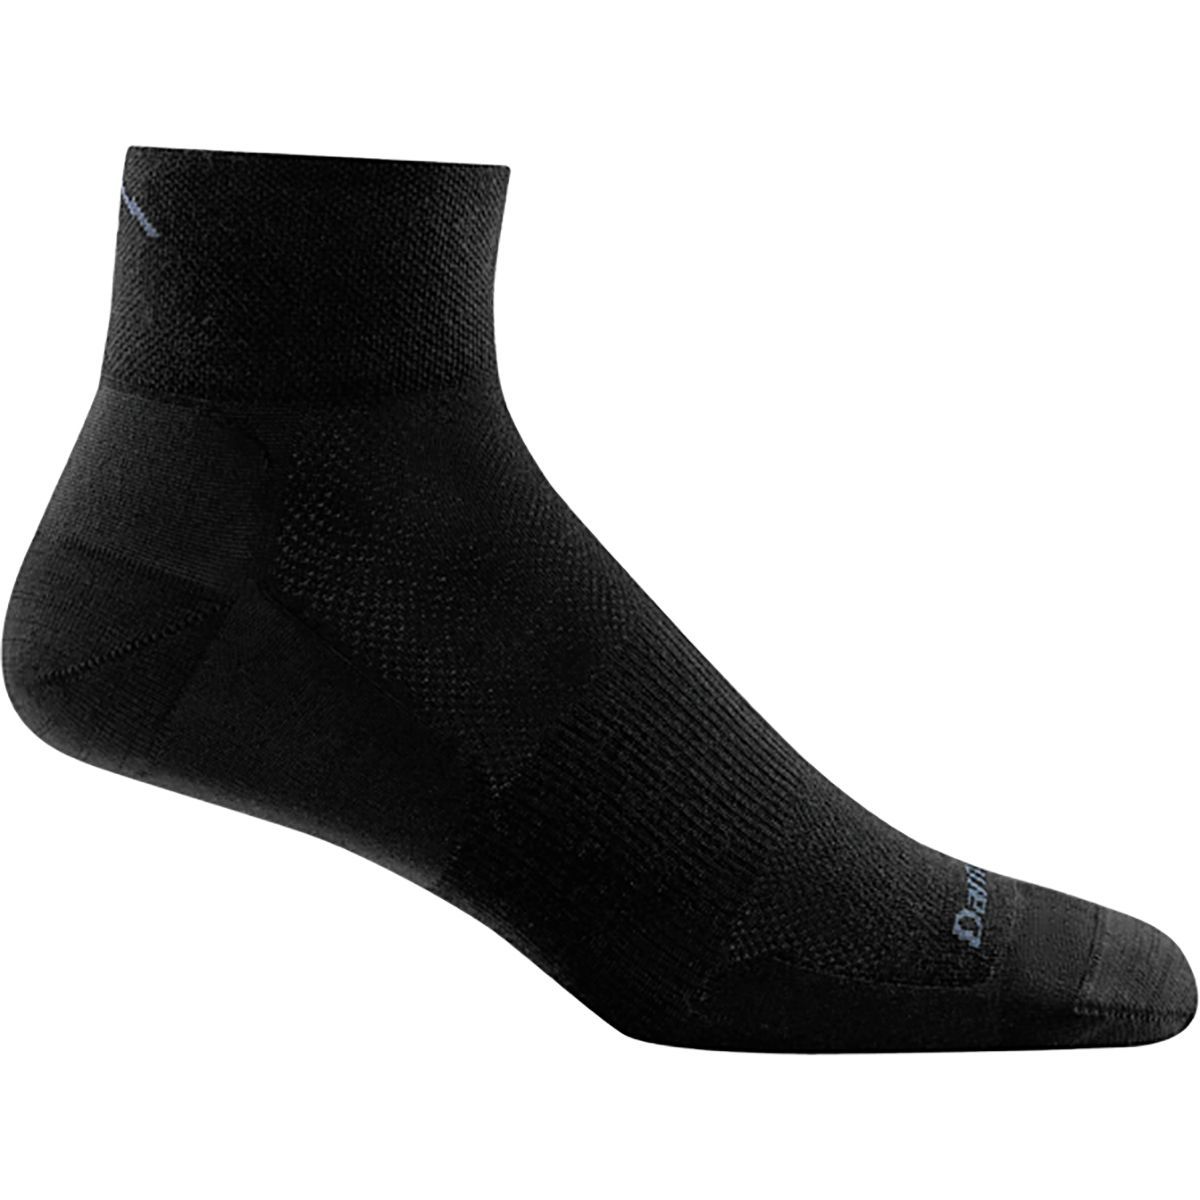 Darn Tough Pursuit 1/4 Ultra-Light Sock - Men's